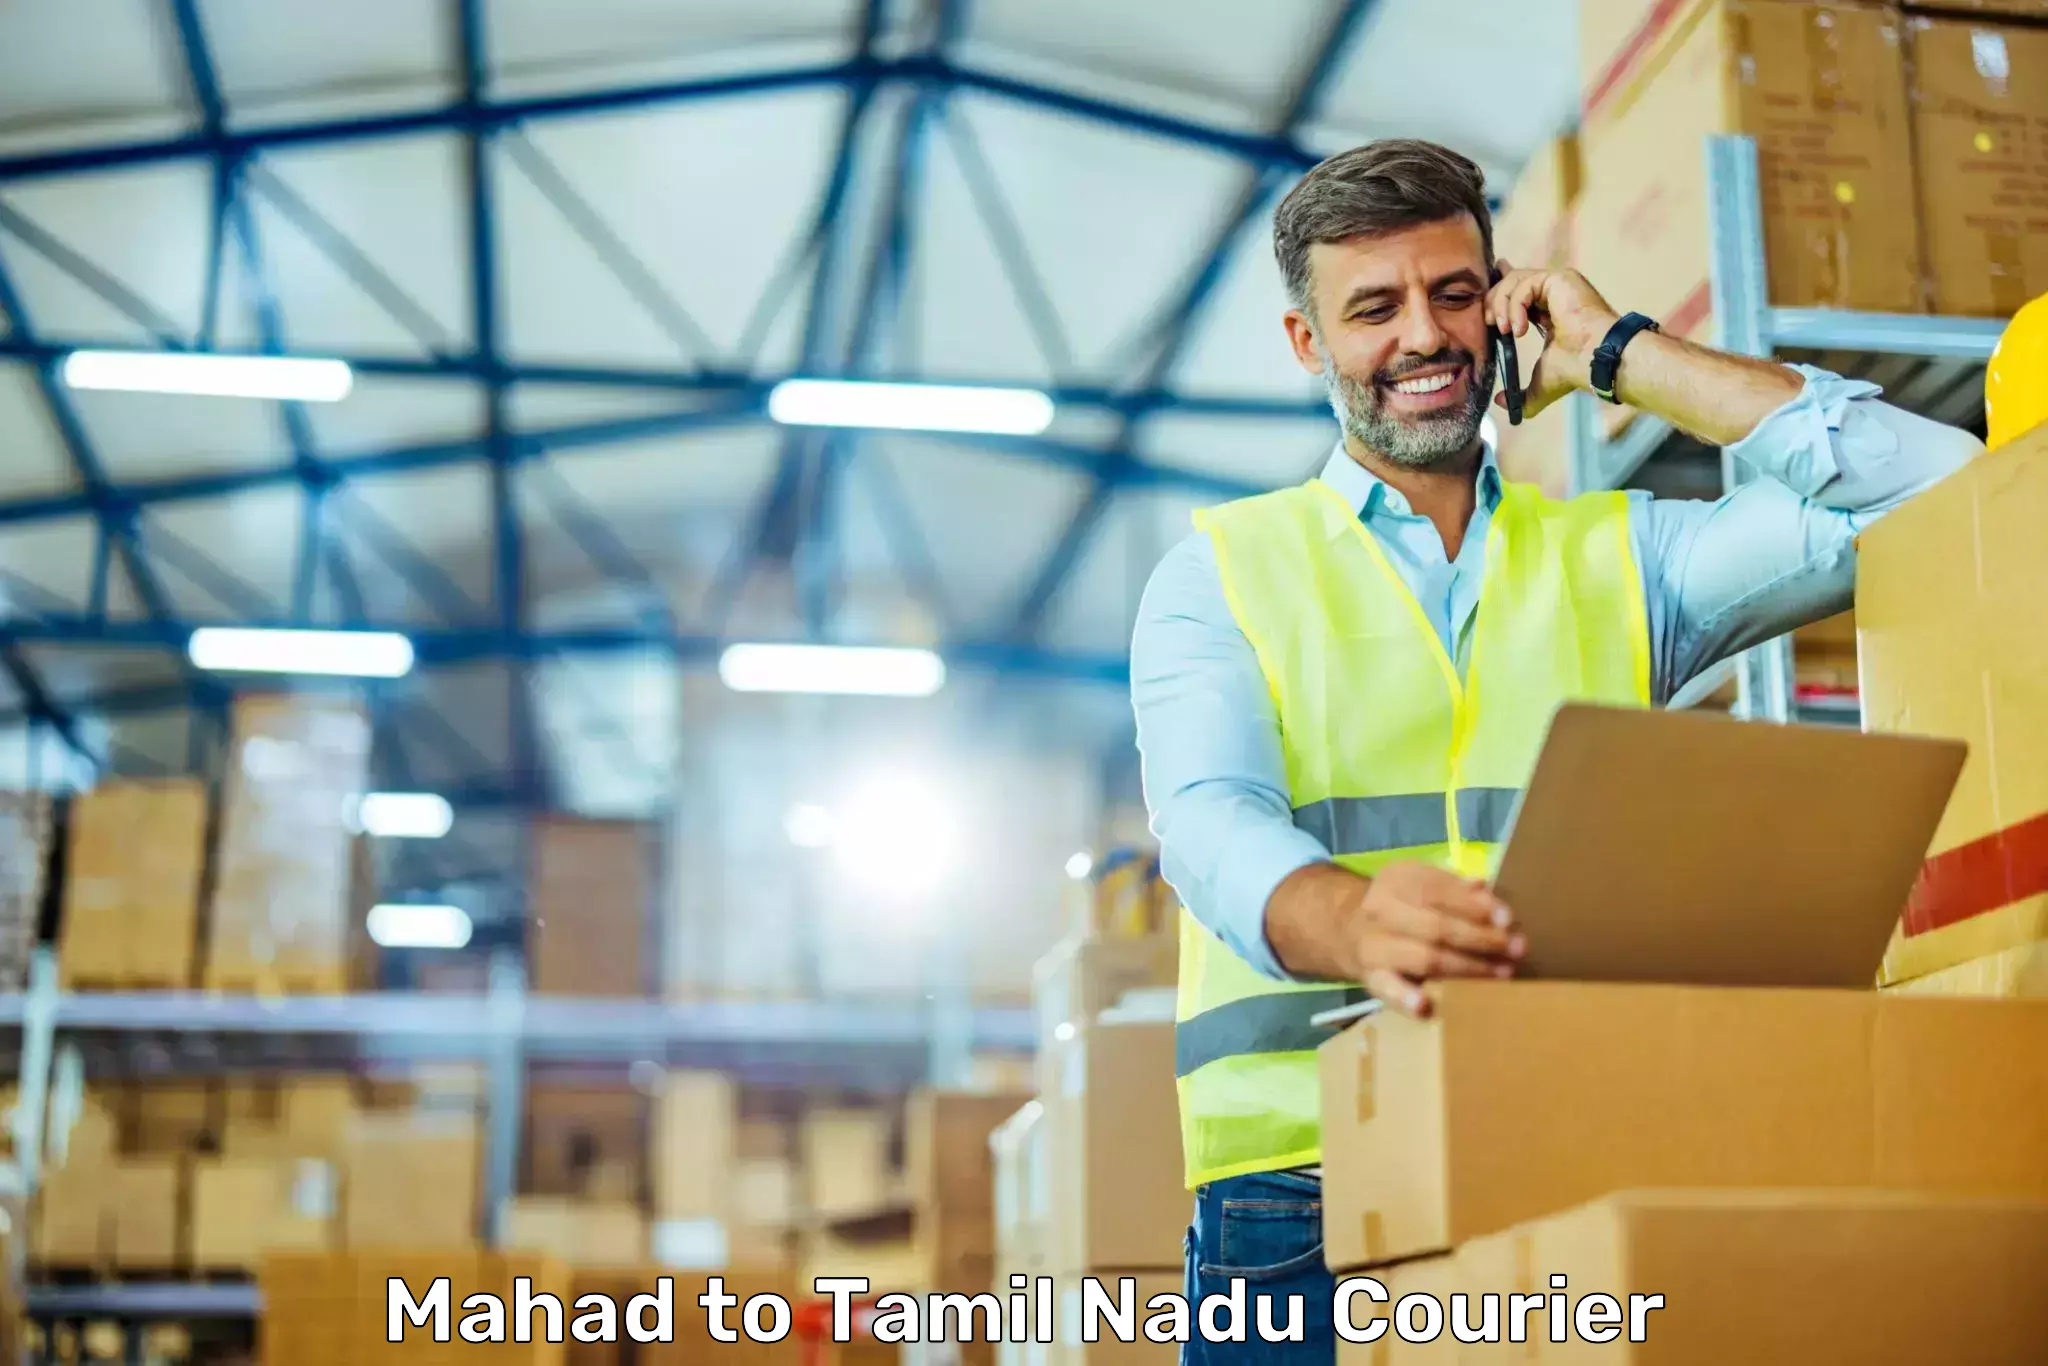 Efficient parcel tracking in Mahad to Sriperumbudur